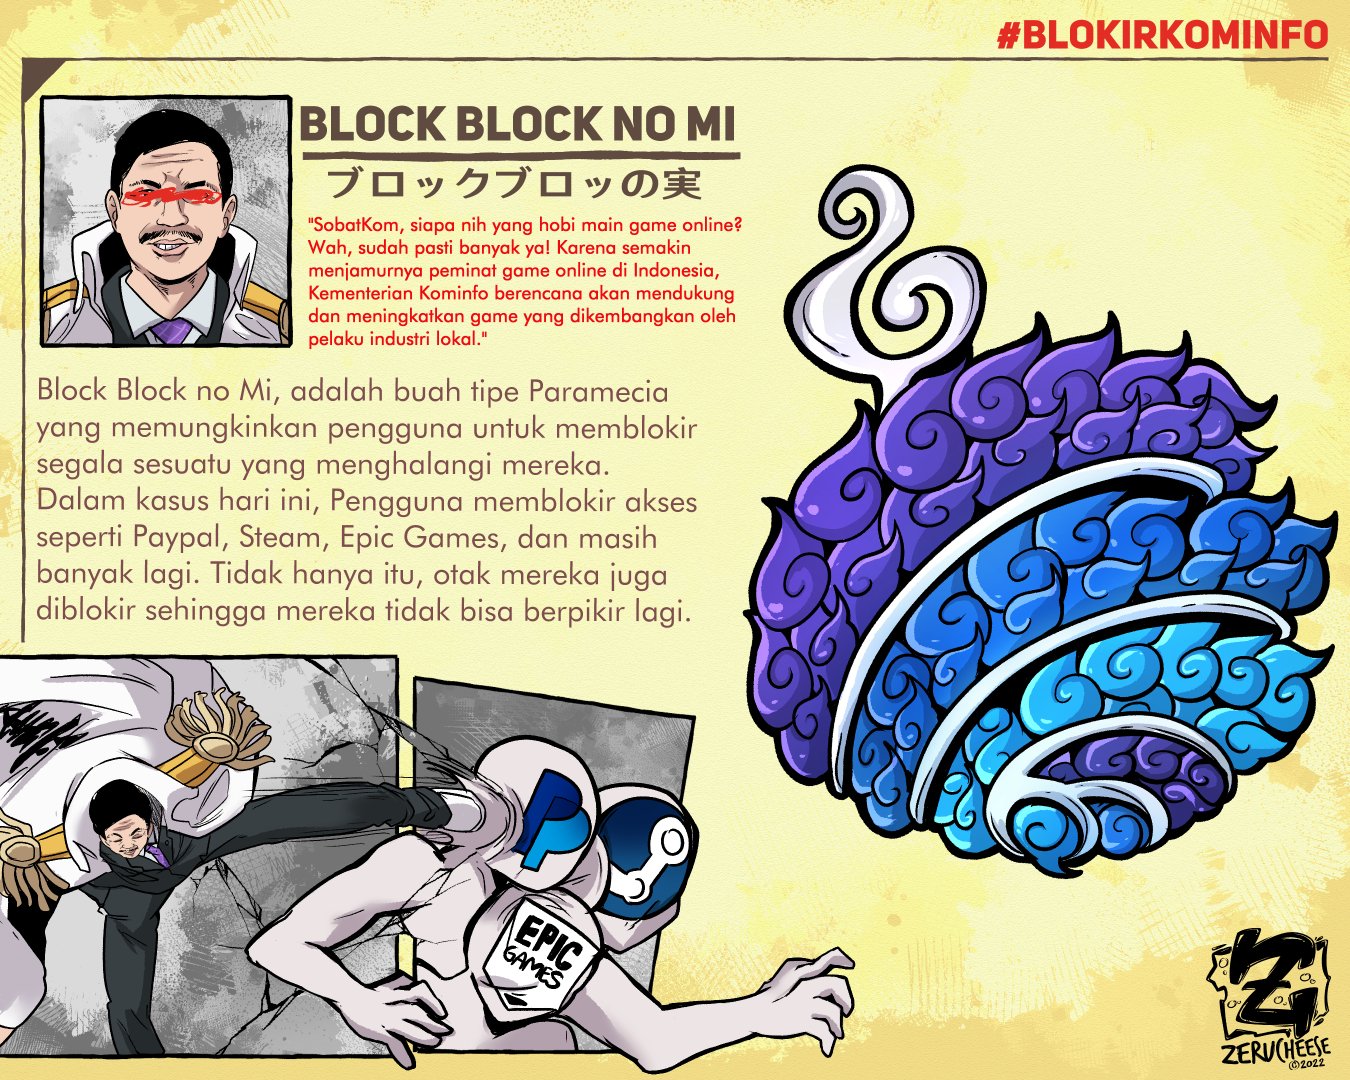 Deskripsi ilustrasi Blokir Kominfo versi anime One Piece